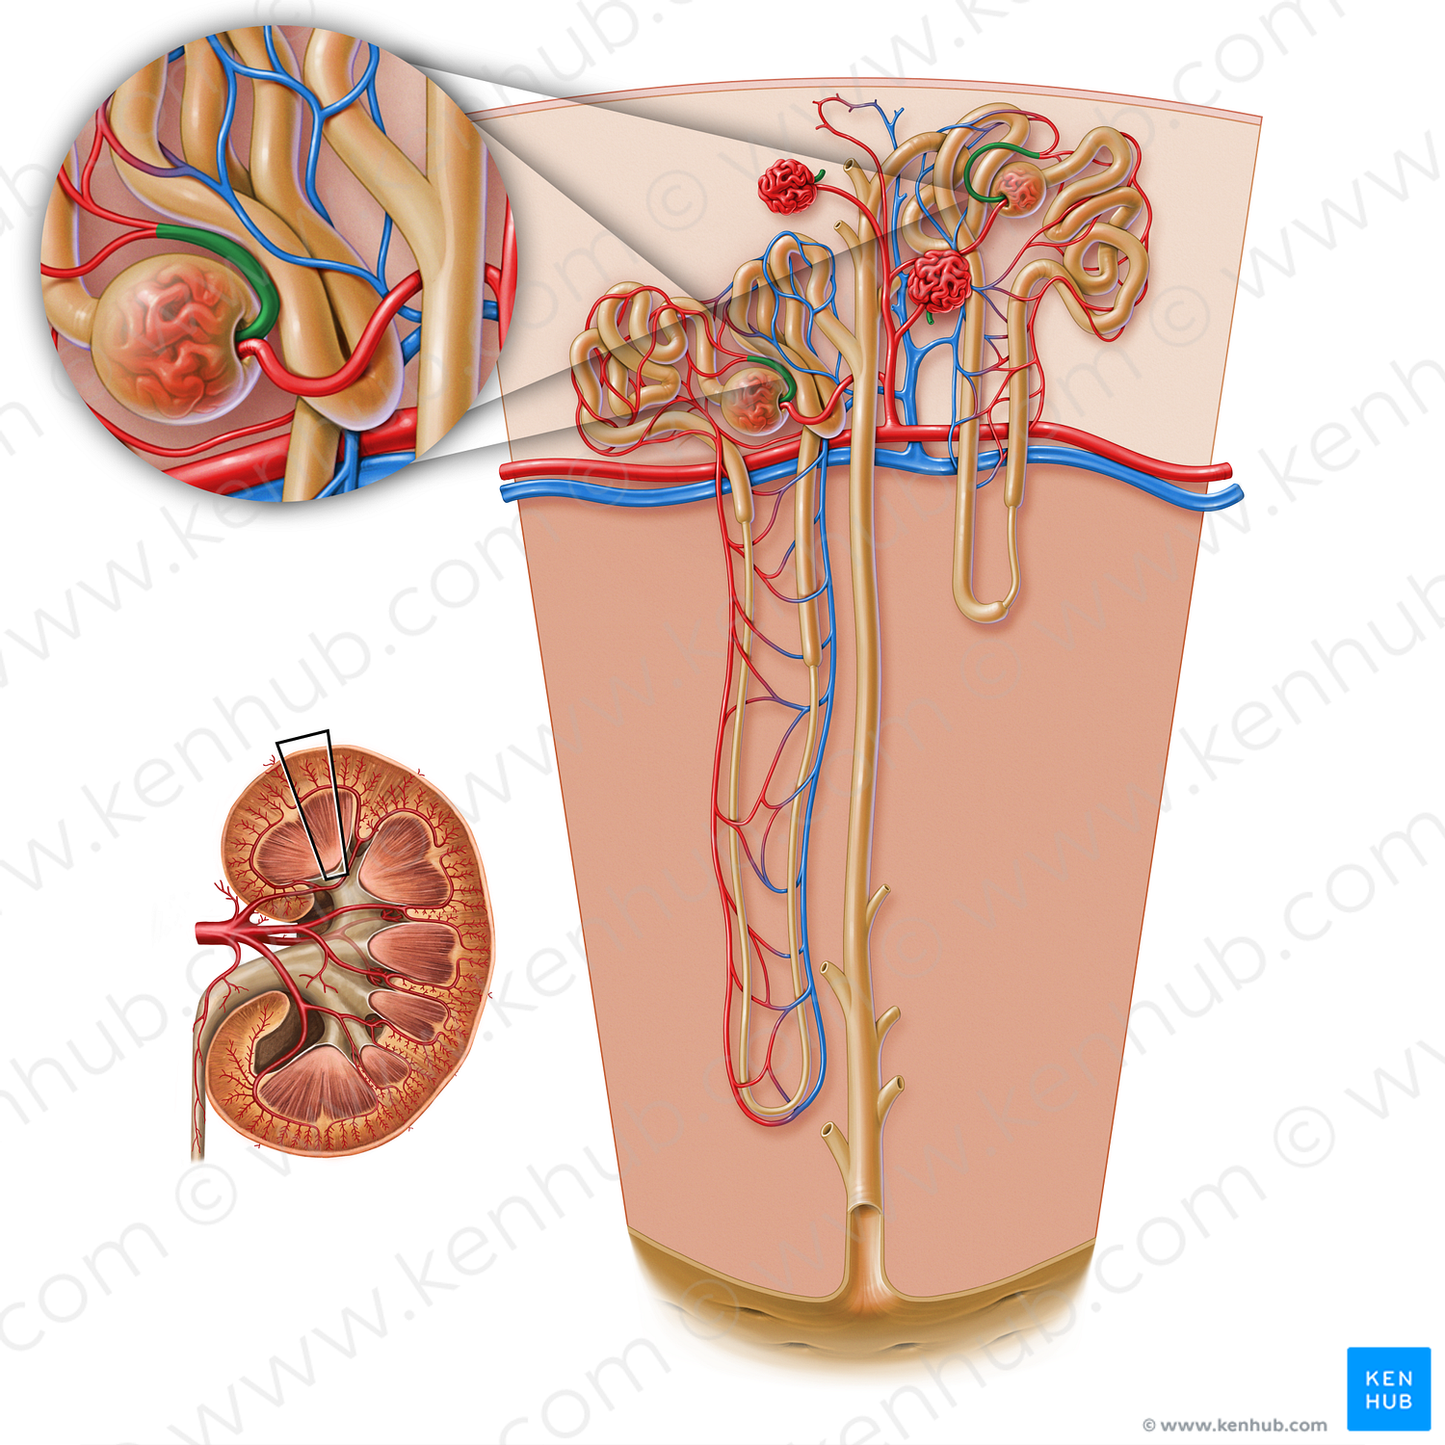 Efferent glomerular arteriole of renal corpuscle (#17205)